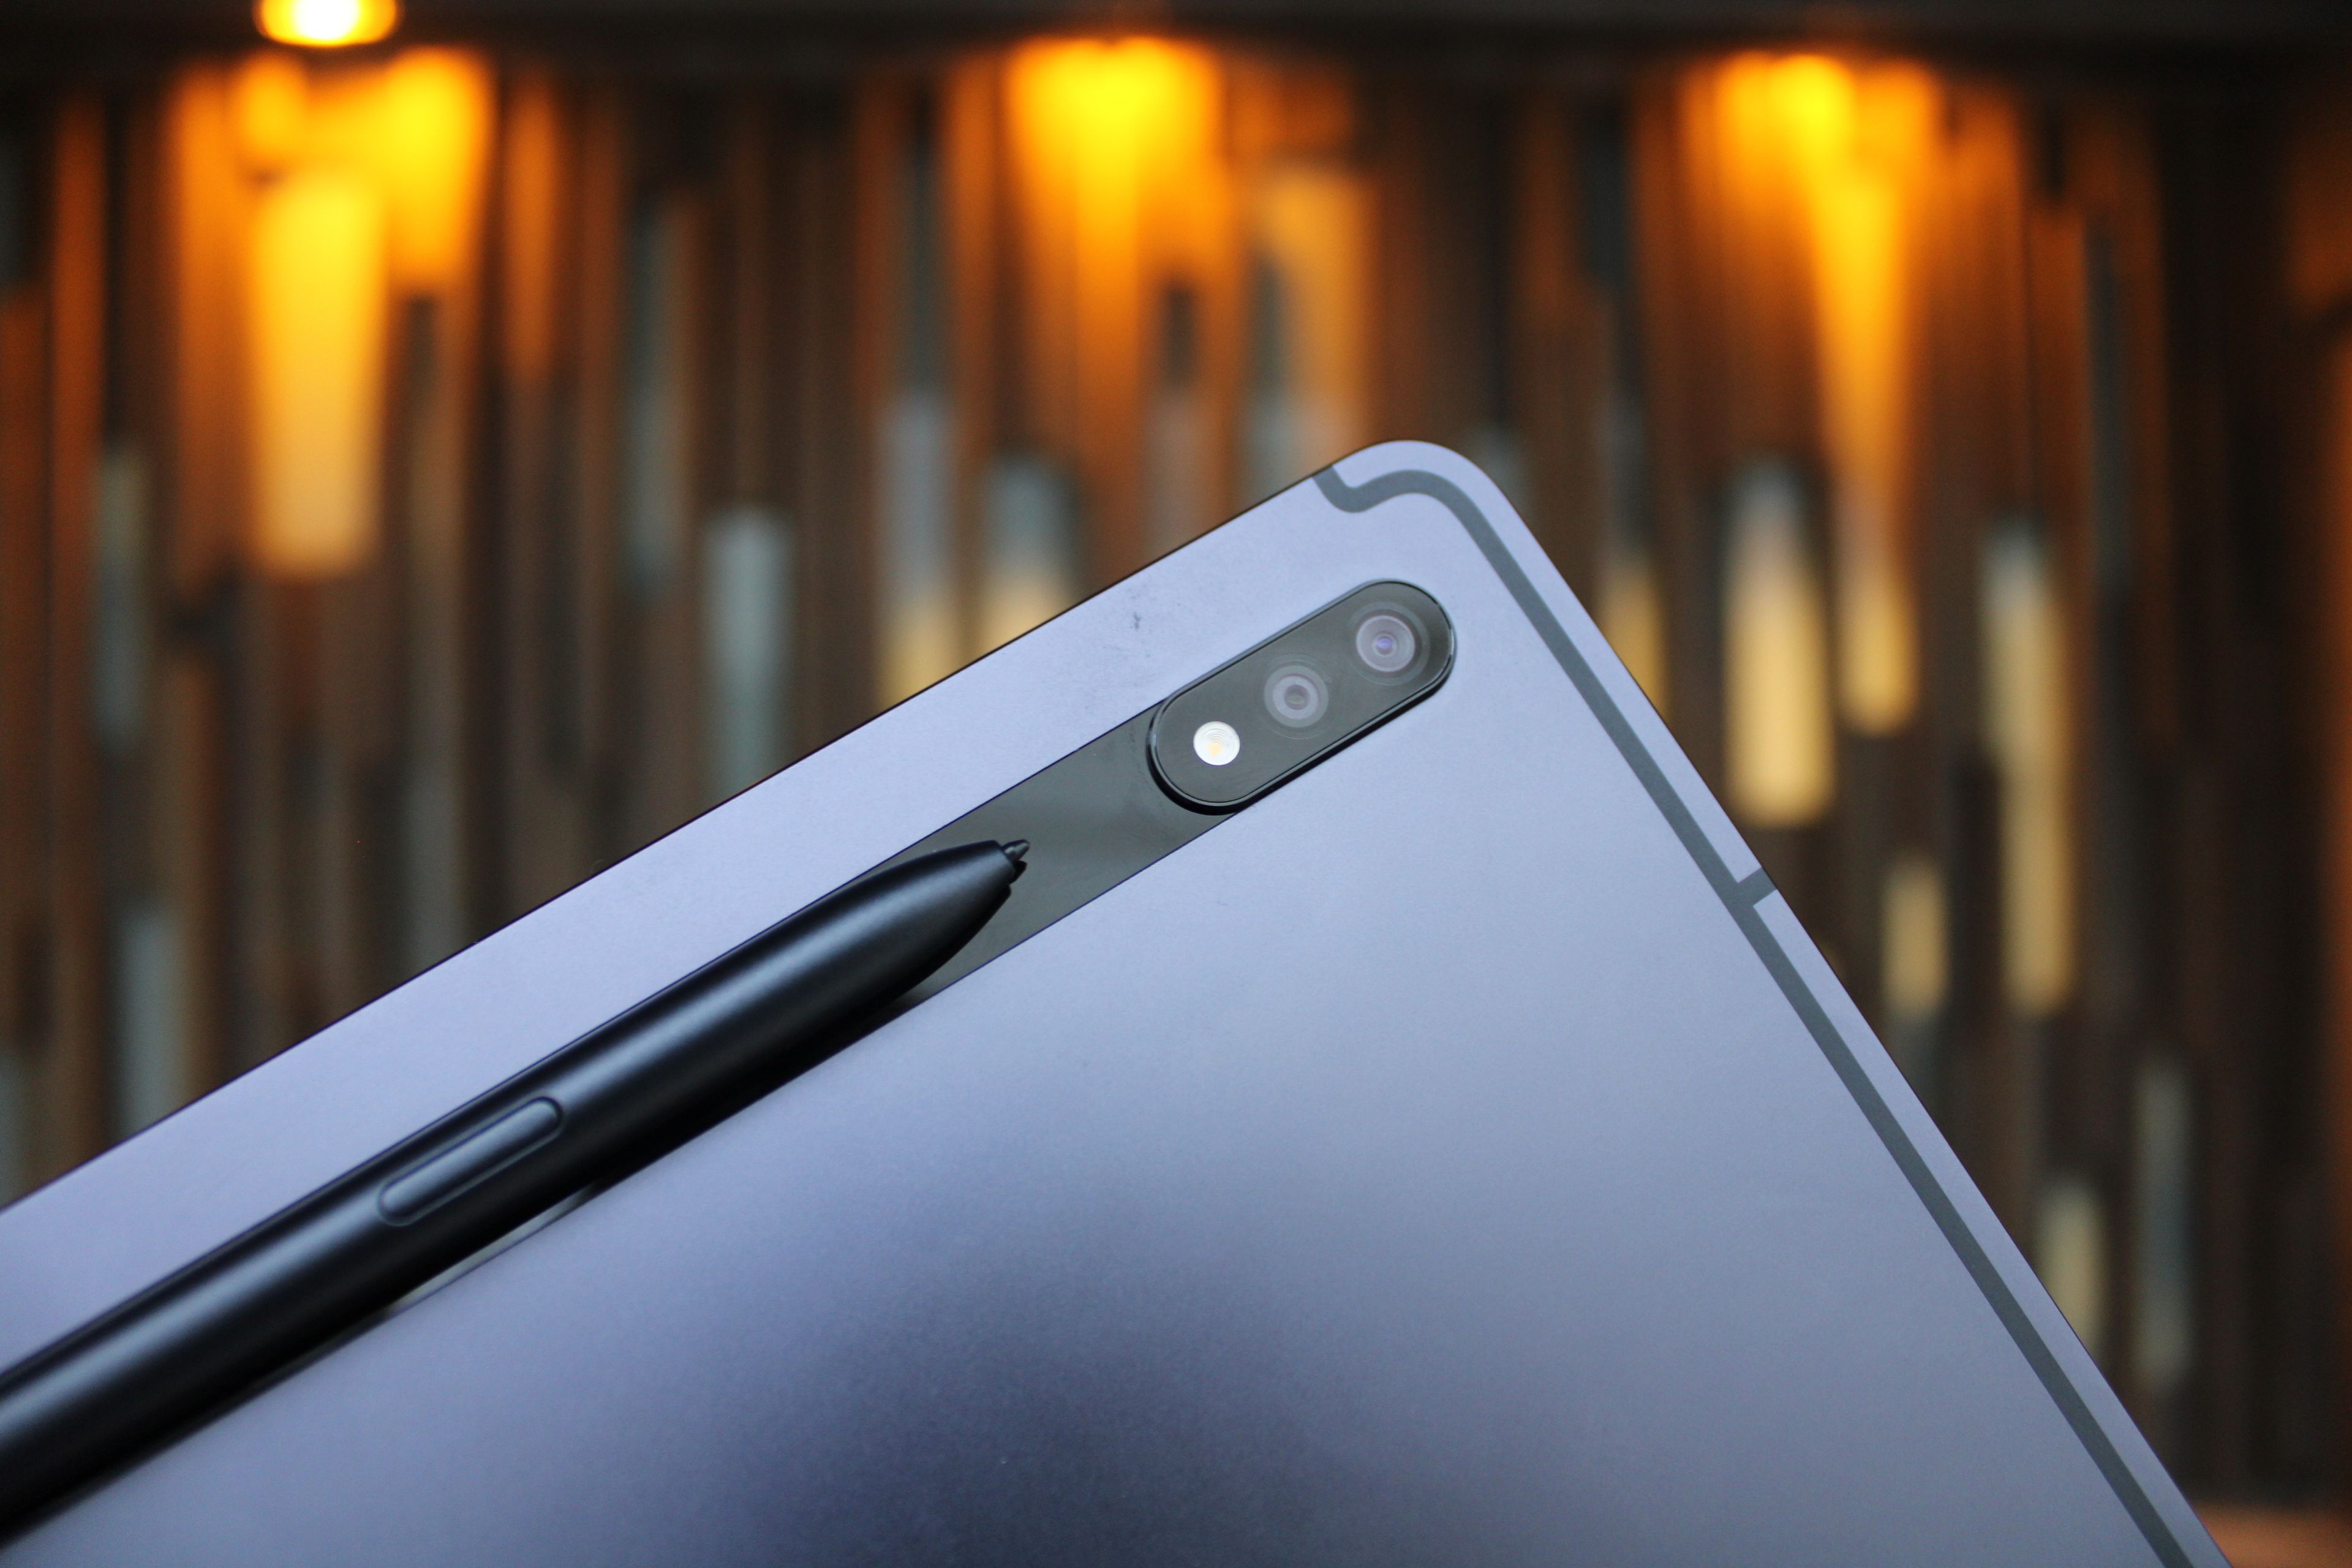 Samsung Galaxy Tab S7+ review